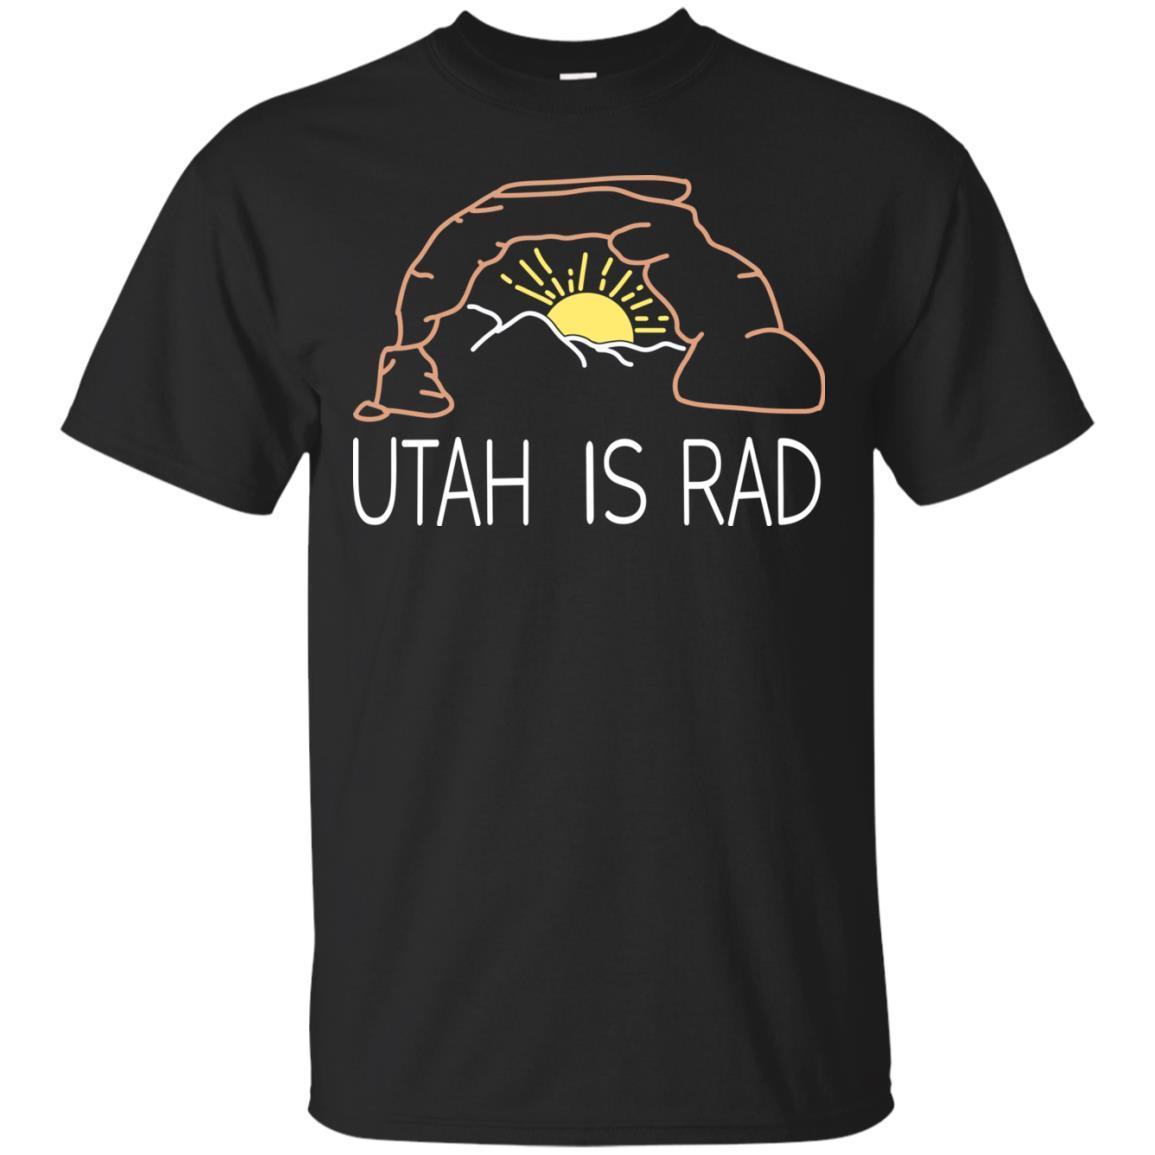 Order Utah Is Rad Shirts